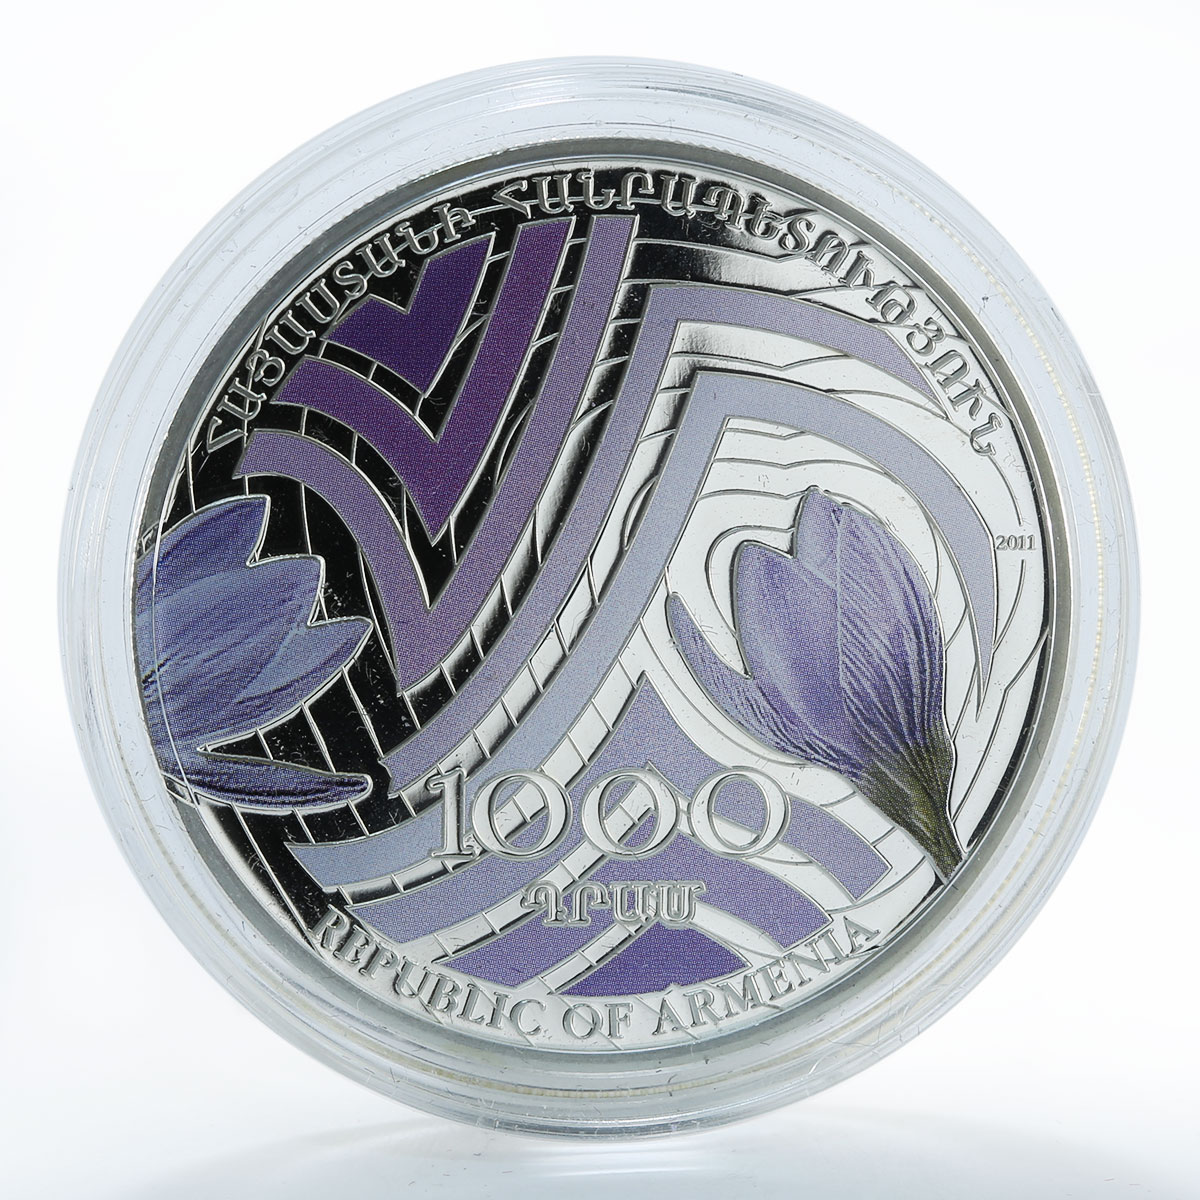 Armenia 1000 dram World of Flowers series Crocus Saffron proof silver coin 2011